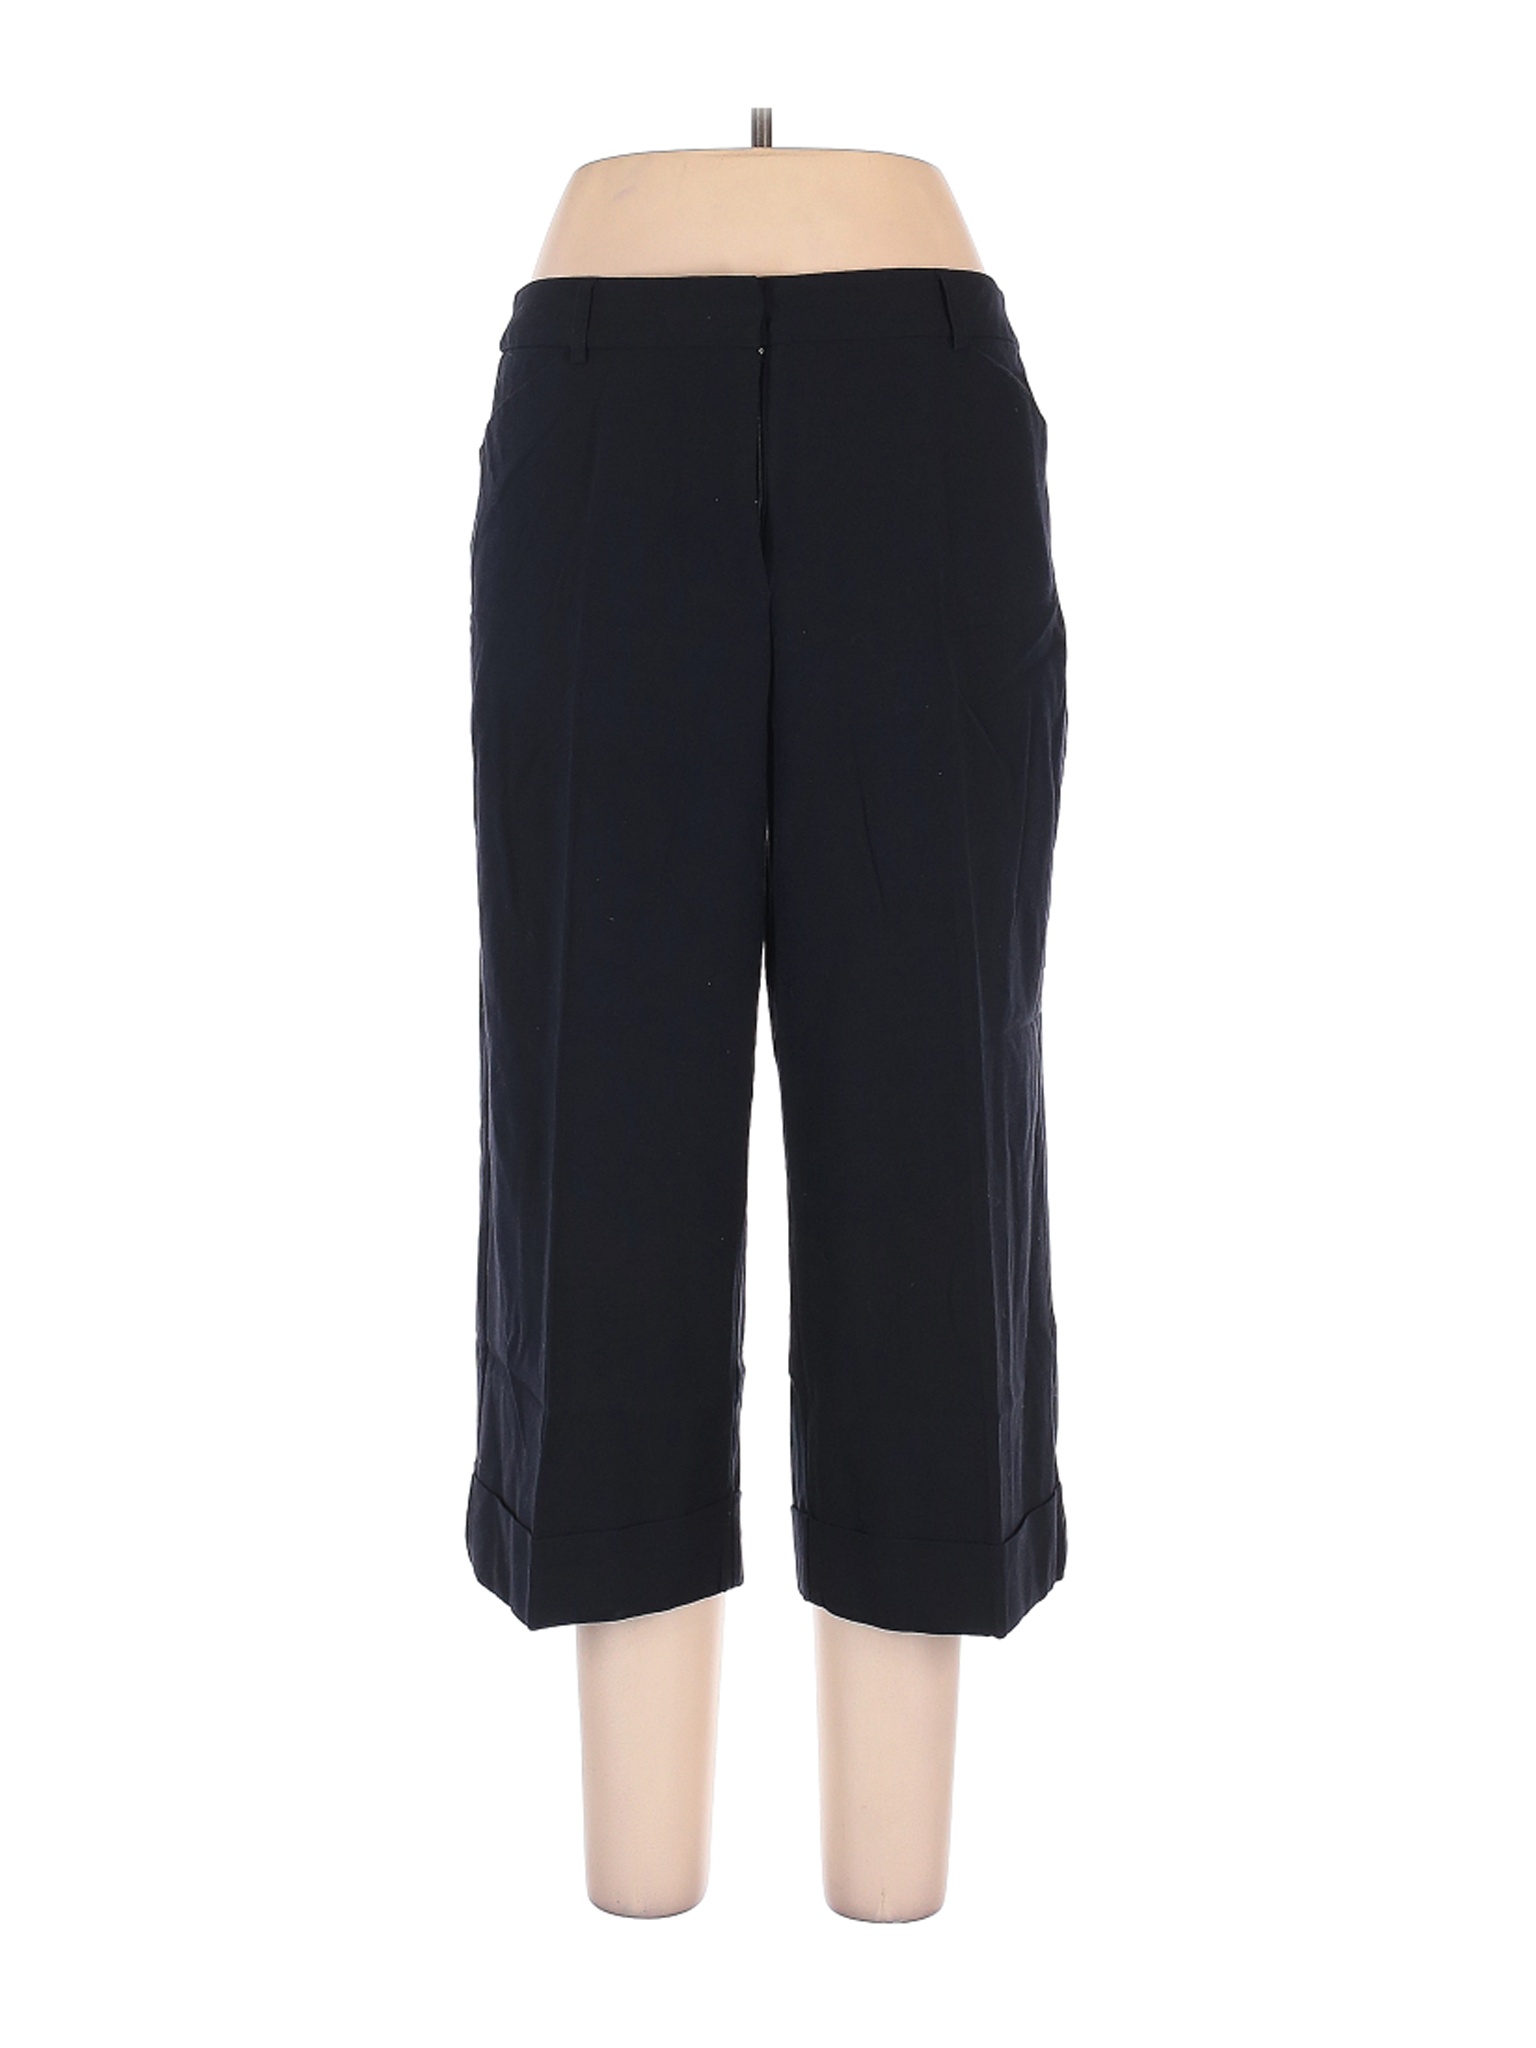 Counterparts Women Black Dress Pants 12 | eBay